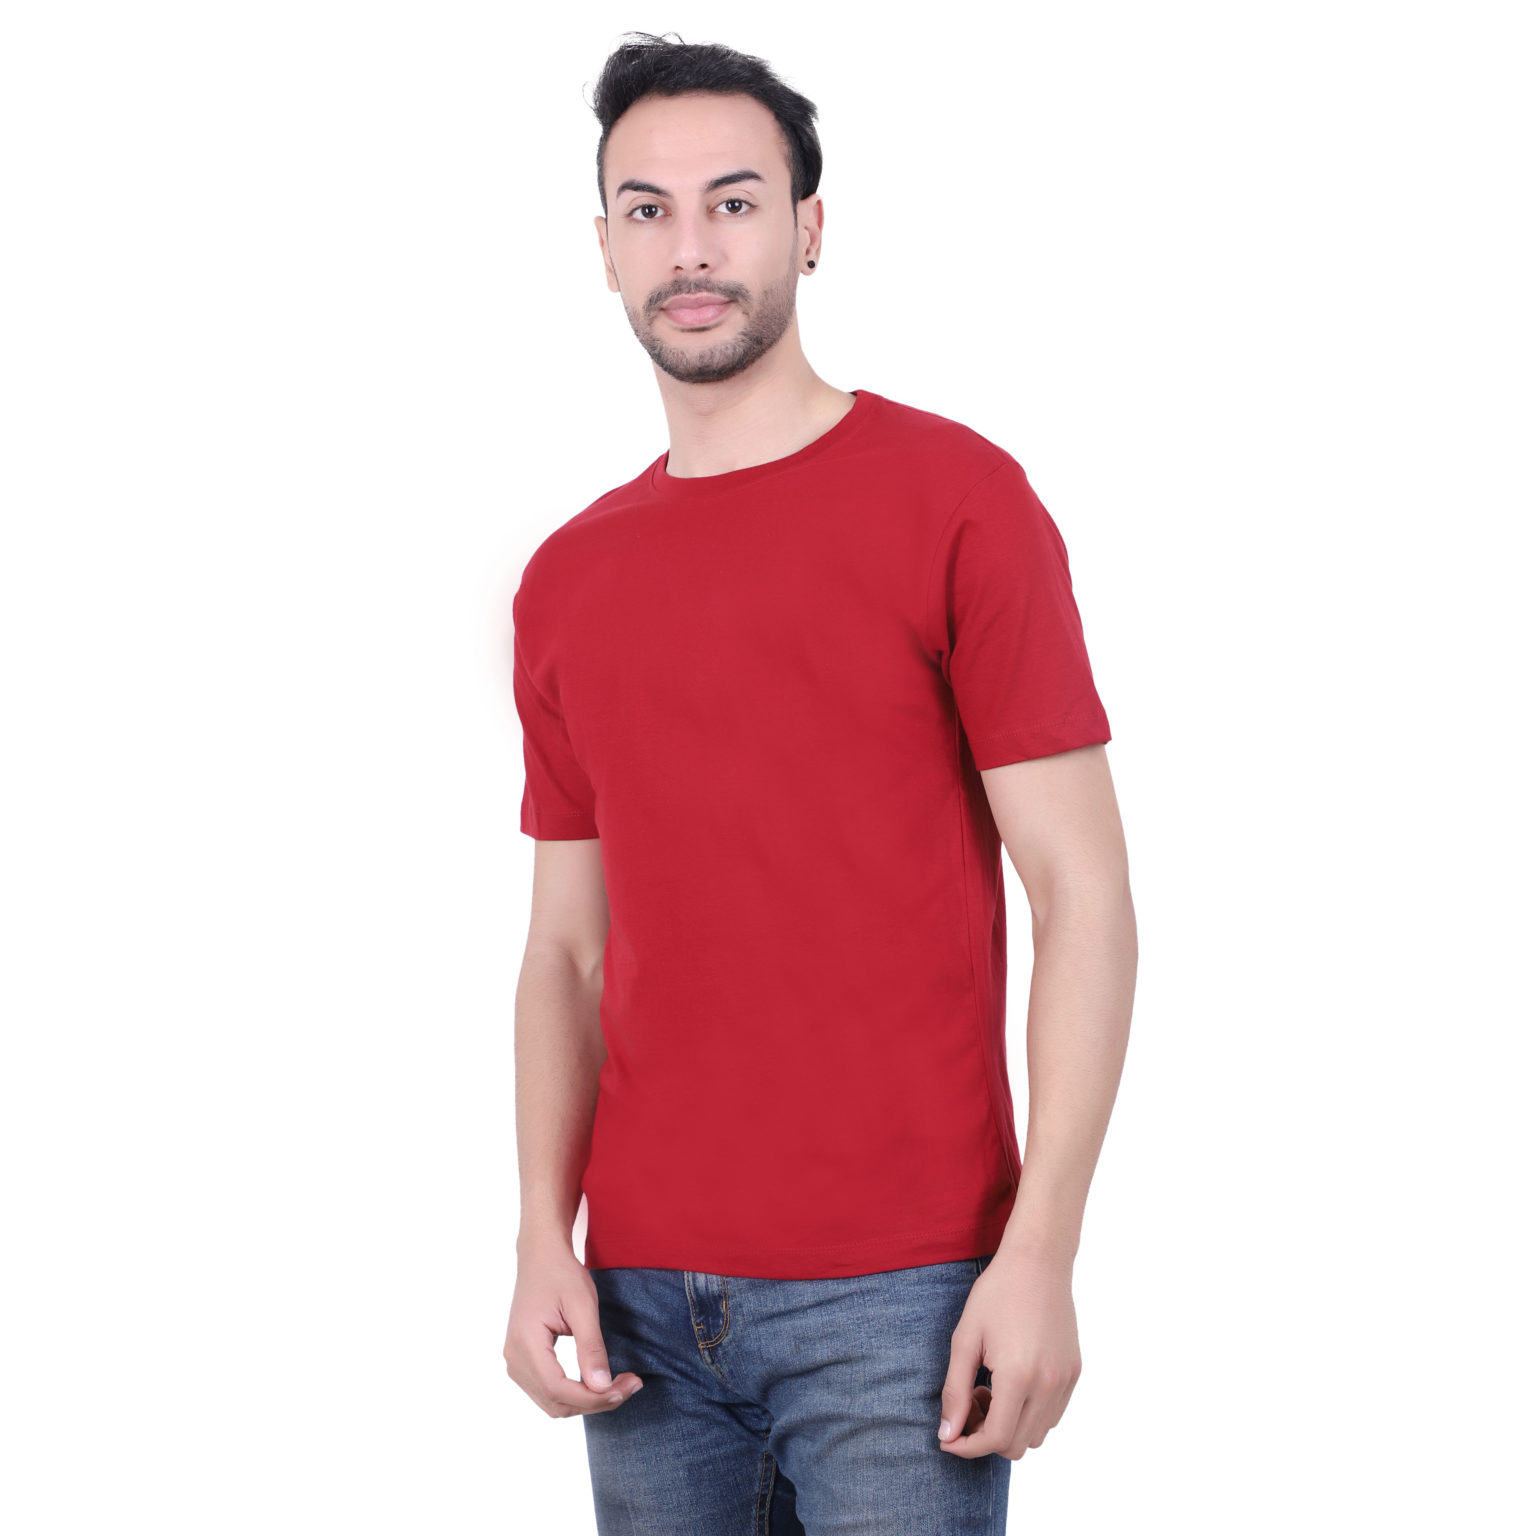 Bio Wash Tshirts Round Neck | Organic cotton Tshirts Ready stock,11 colors